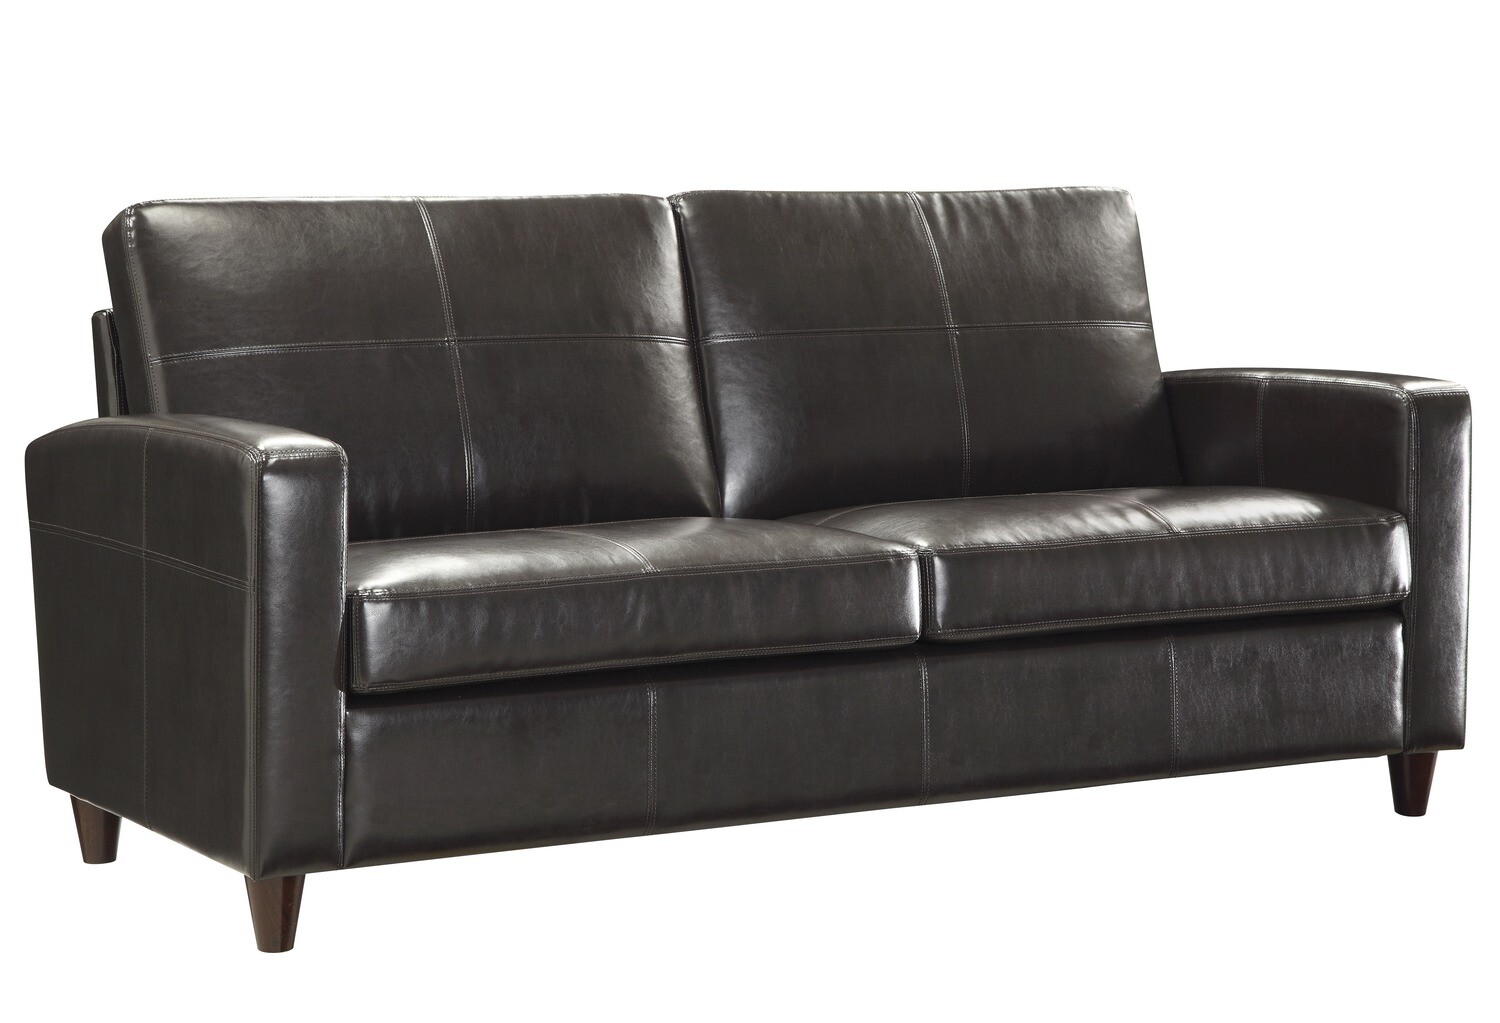 Espresso or Black Bonded Leather Sofa with Espresso Finish Legs